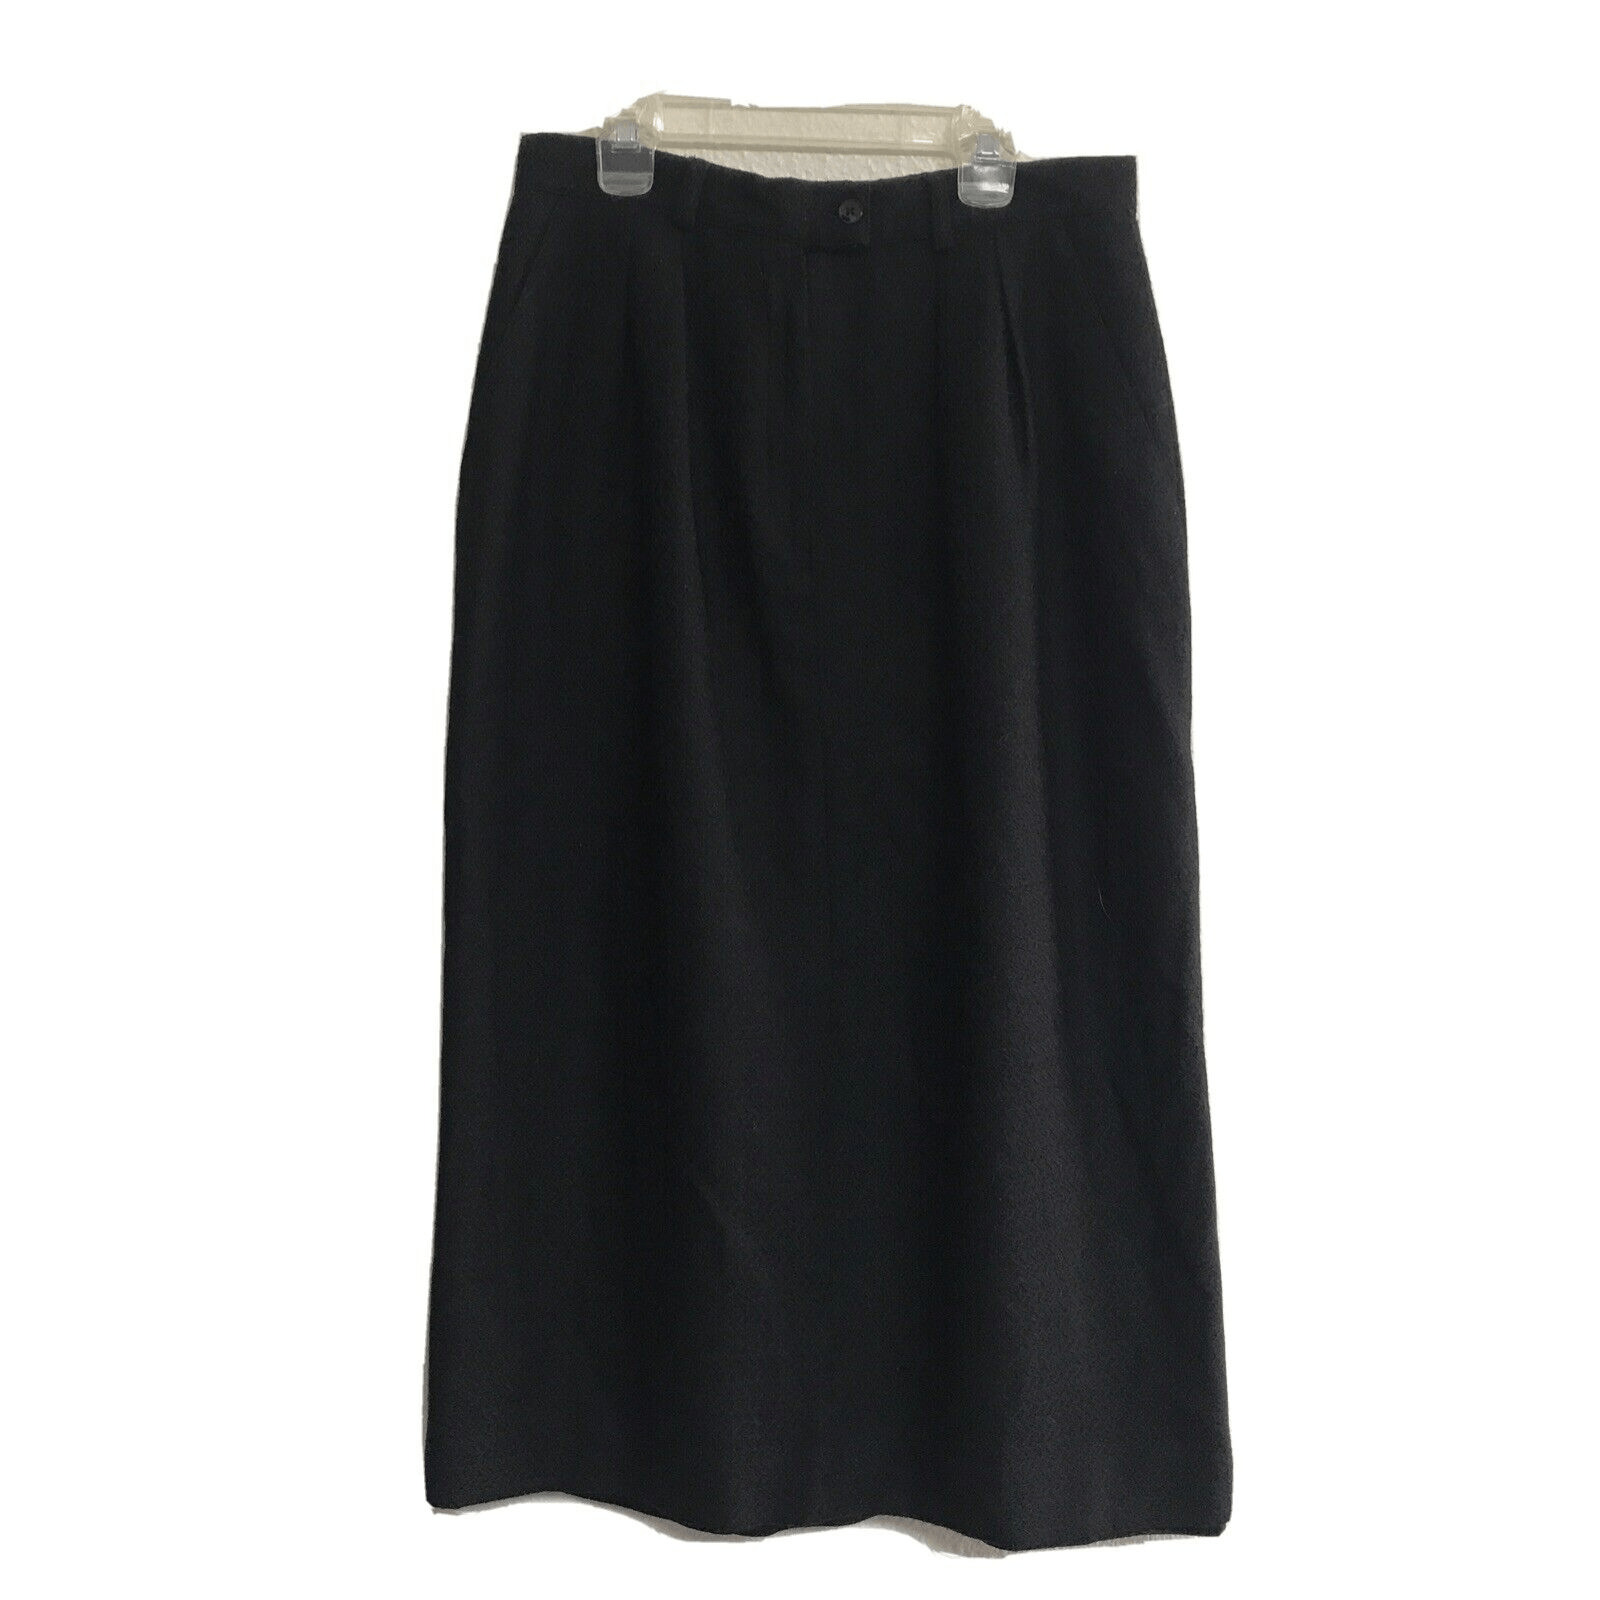 Jones New York Women Skirt 14 Black Midi Front Zip Button Lined Vintage Pleated